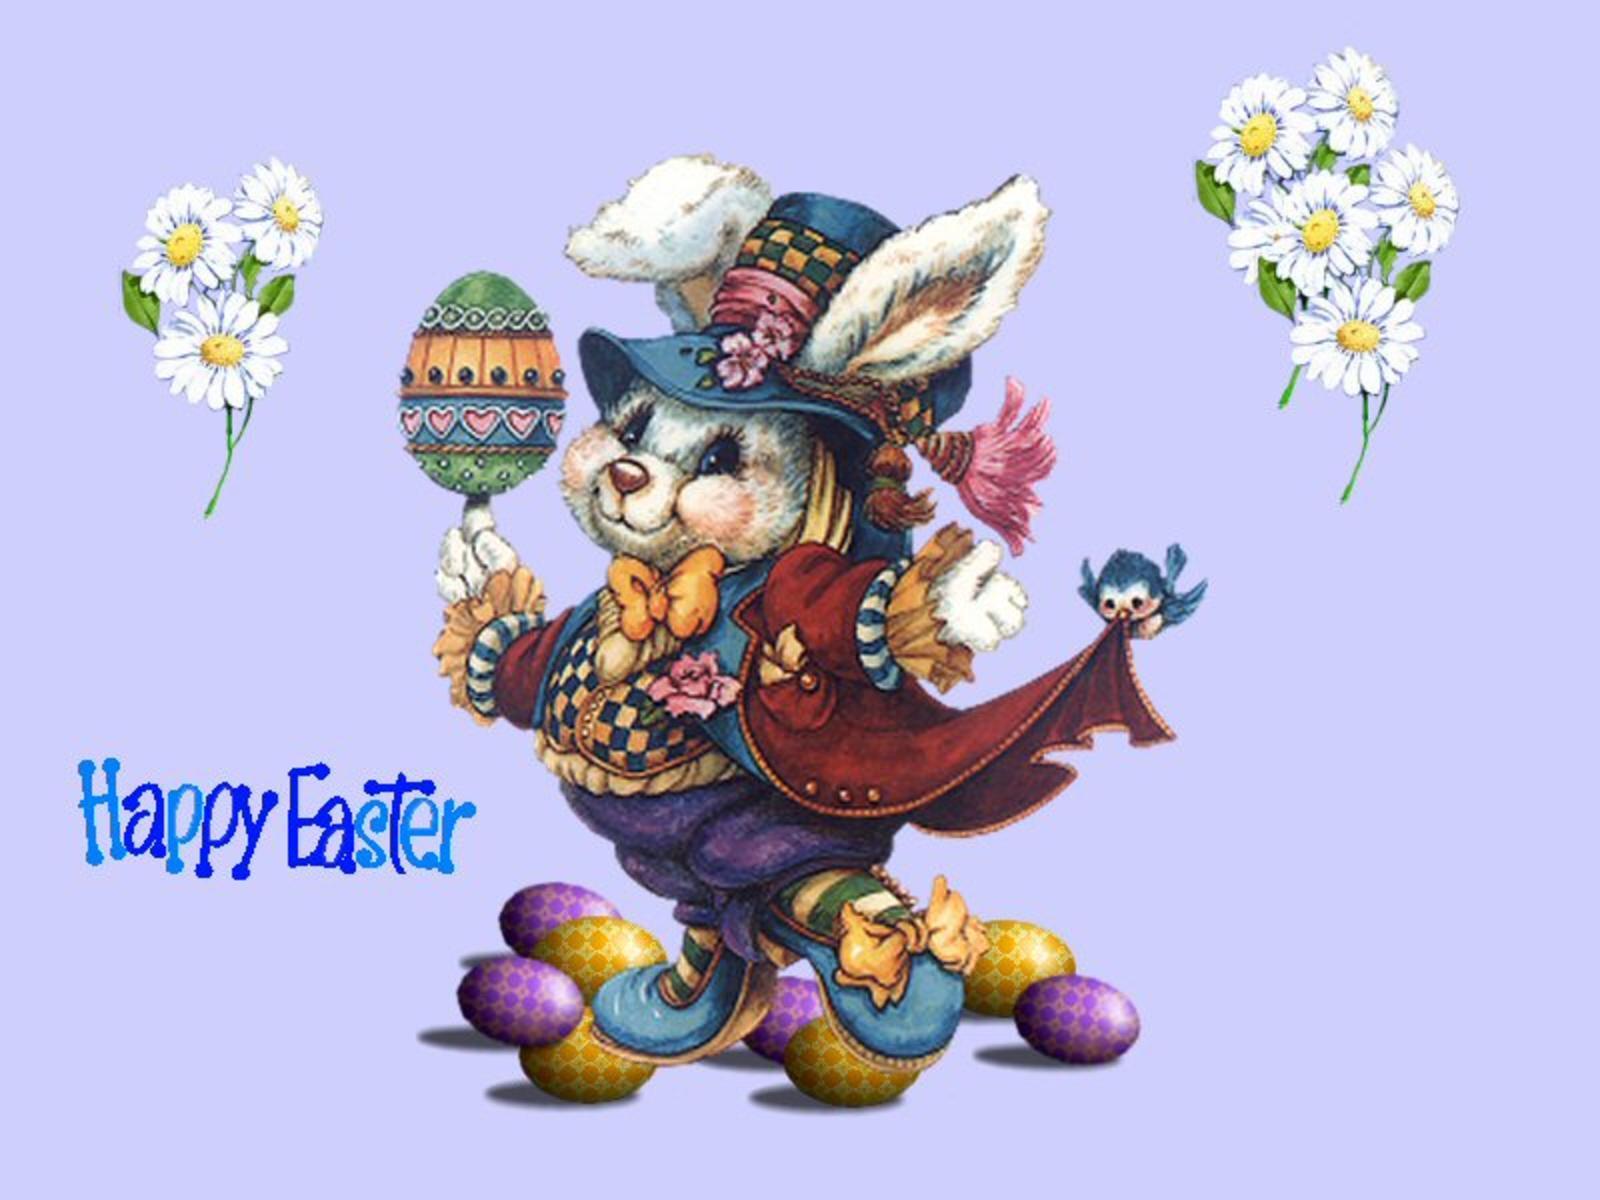 Easter bunny wallpaper free desktop background wallpaper image